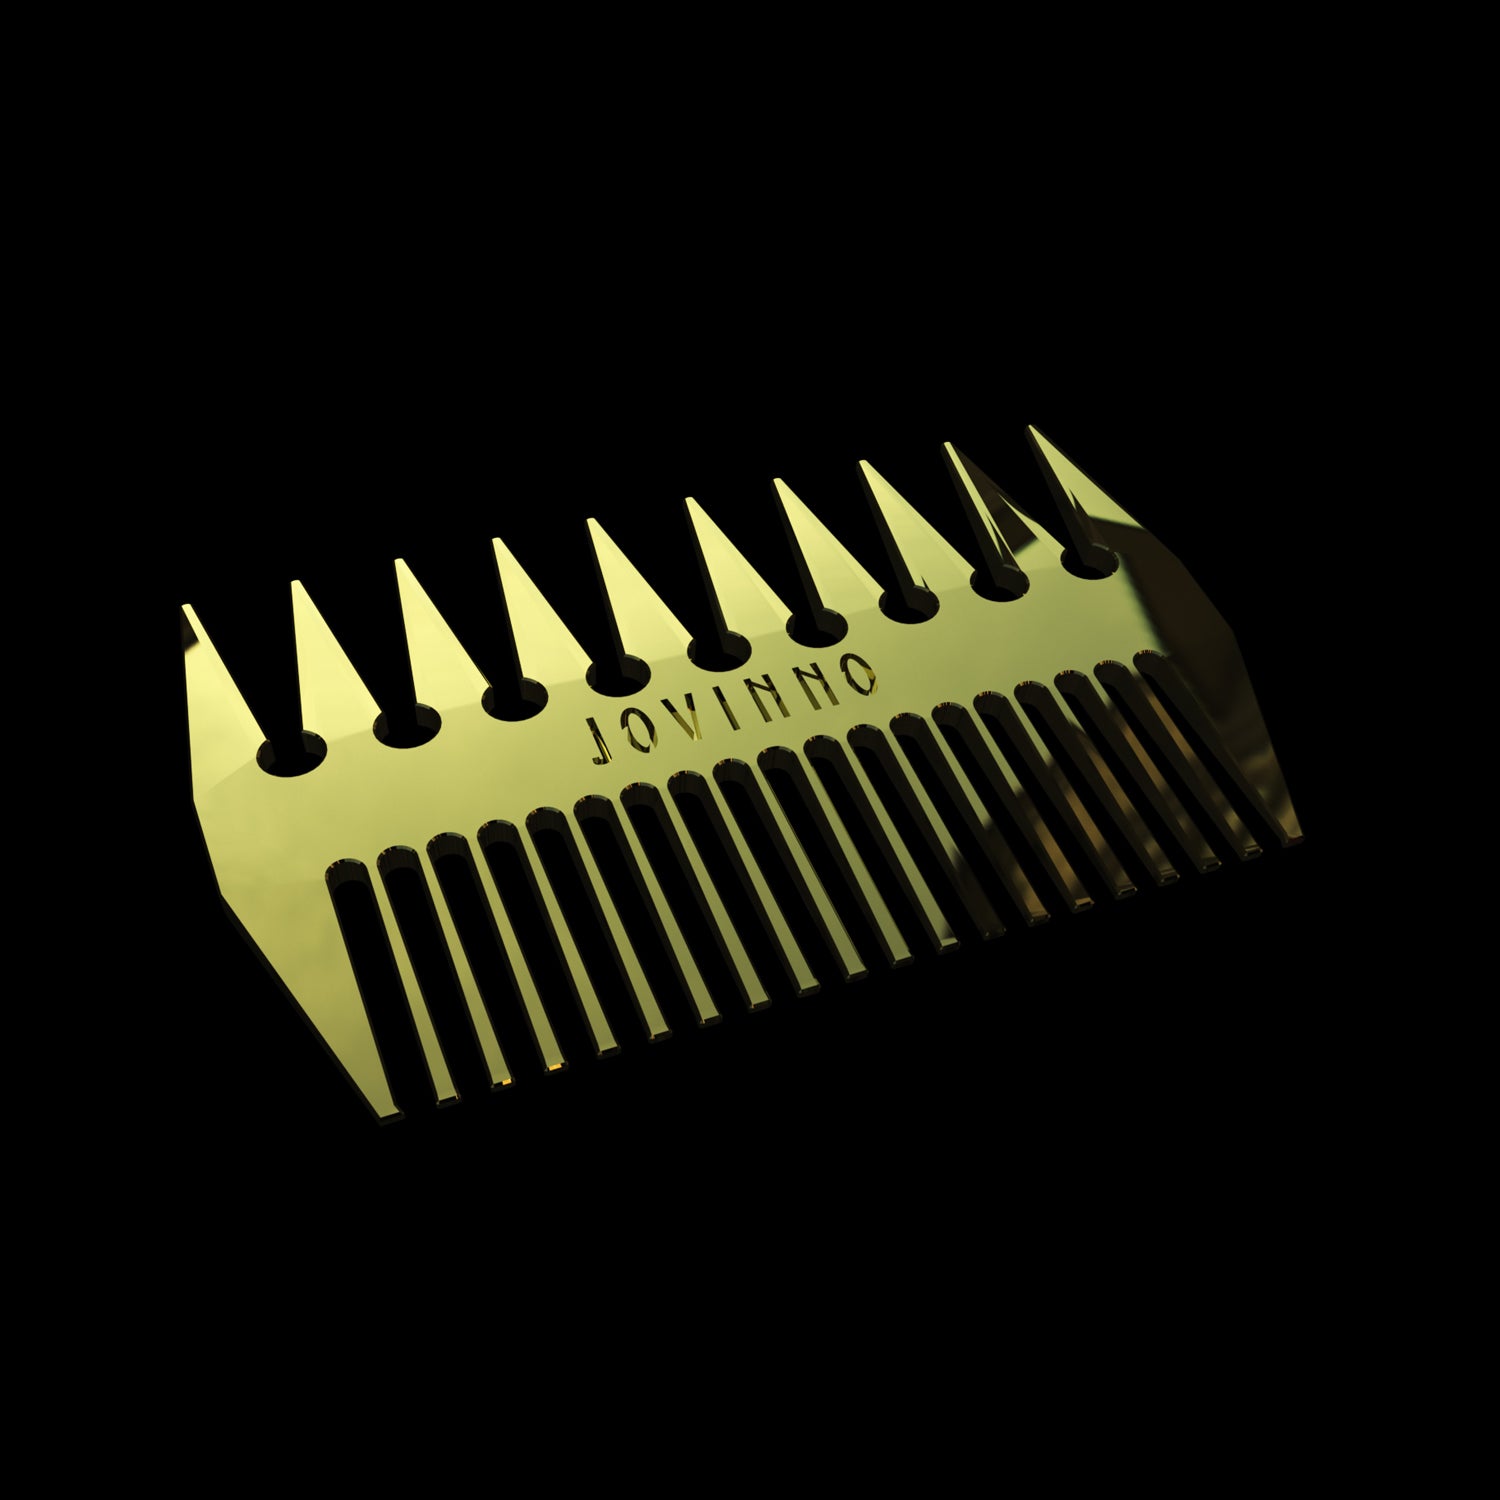 Premium Hair & Beard Metal Styling Comb